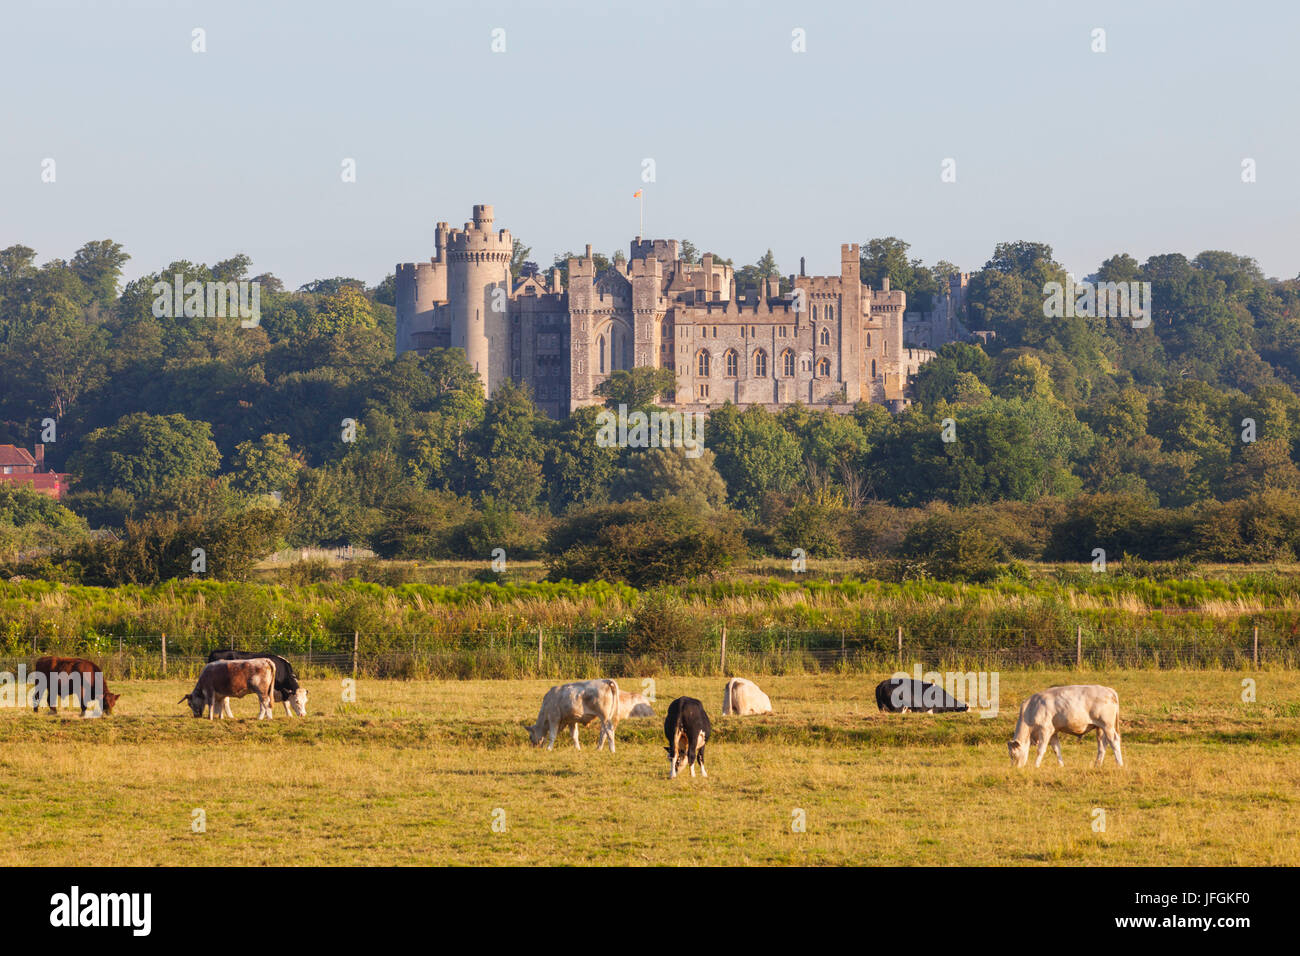 England, West Sussex, Arundel, Arundel Castle Stock Photo